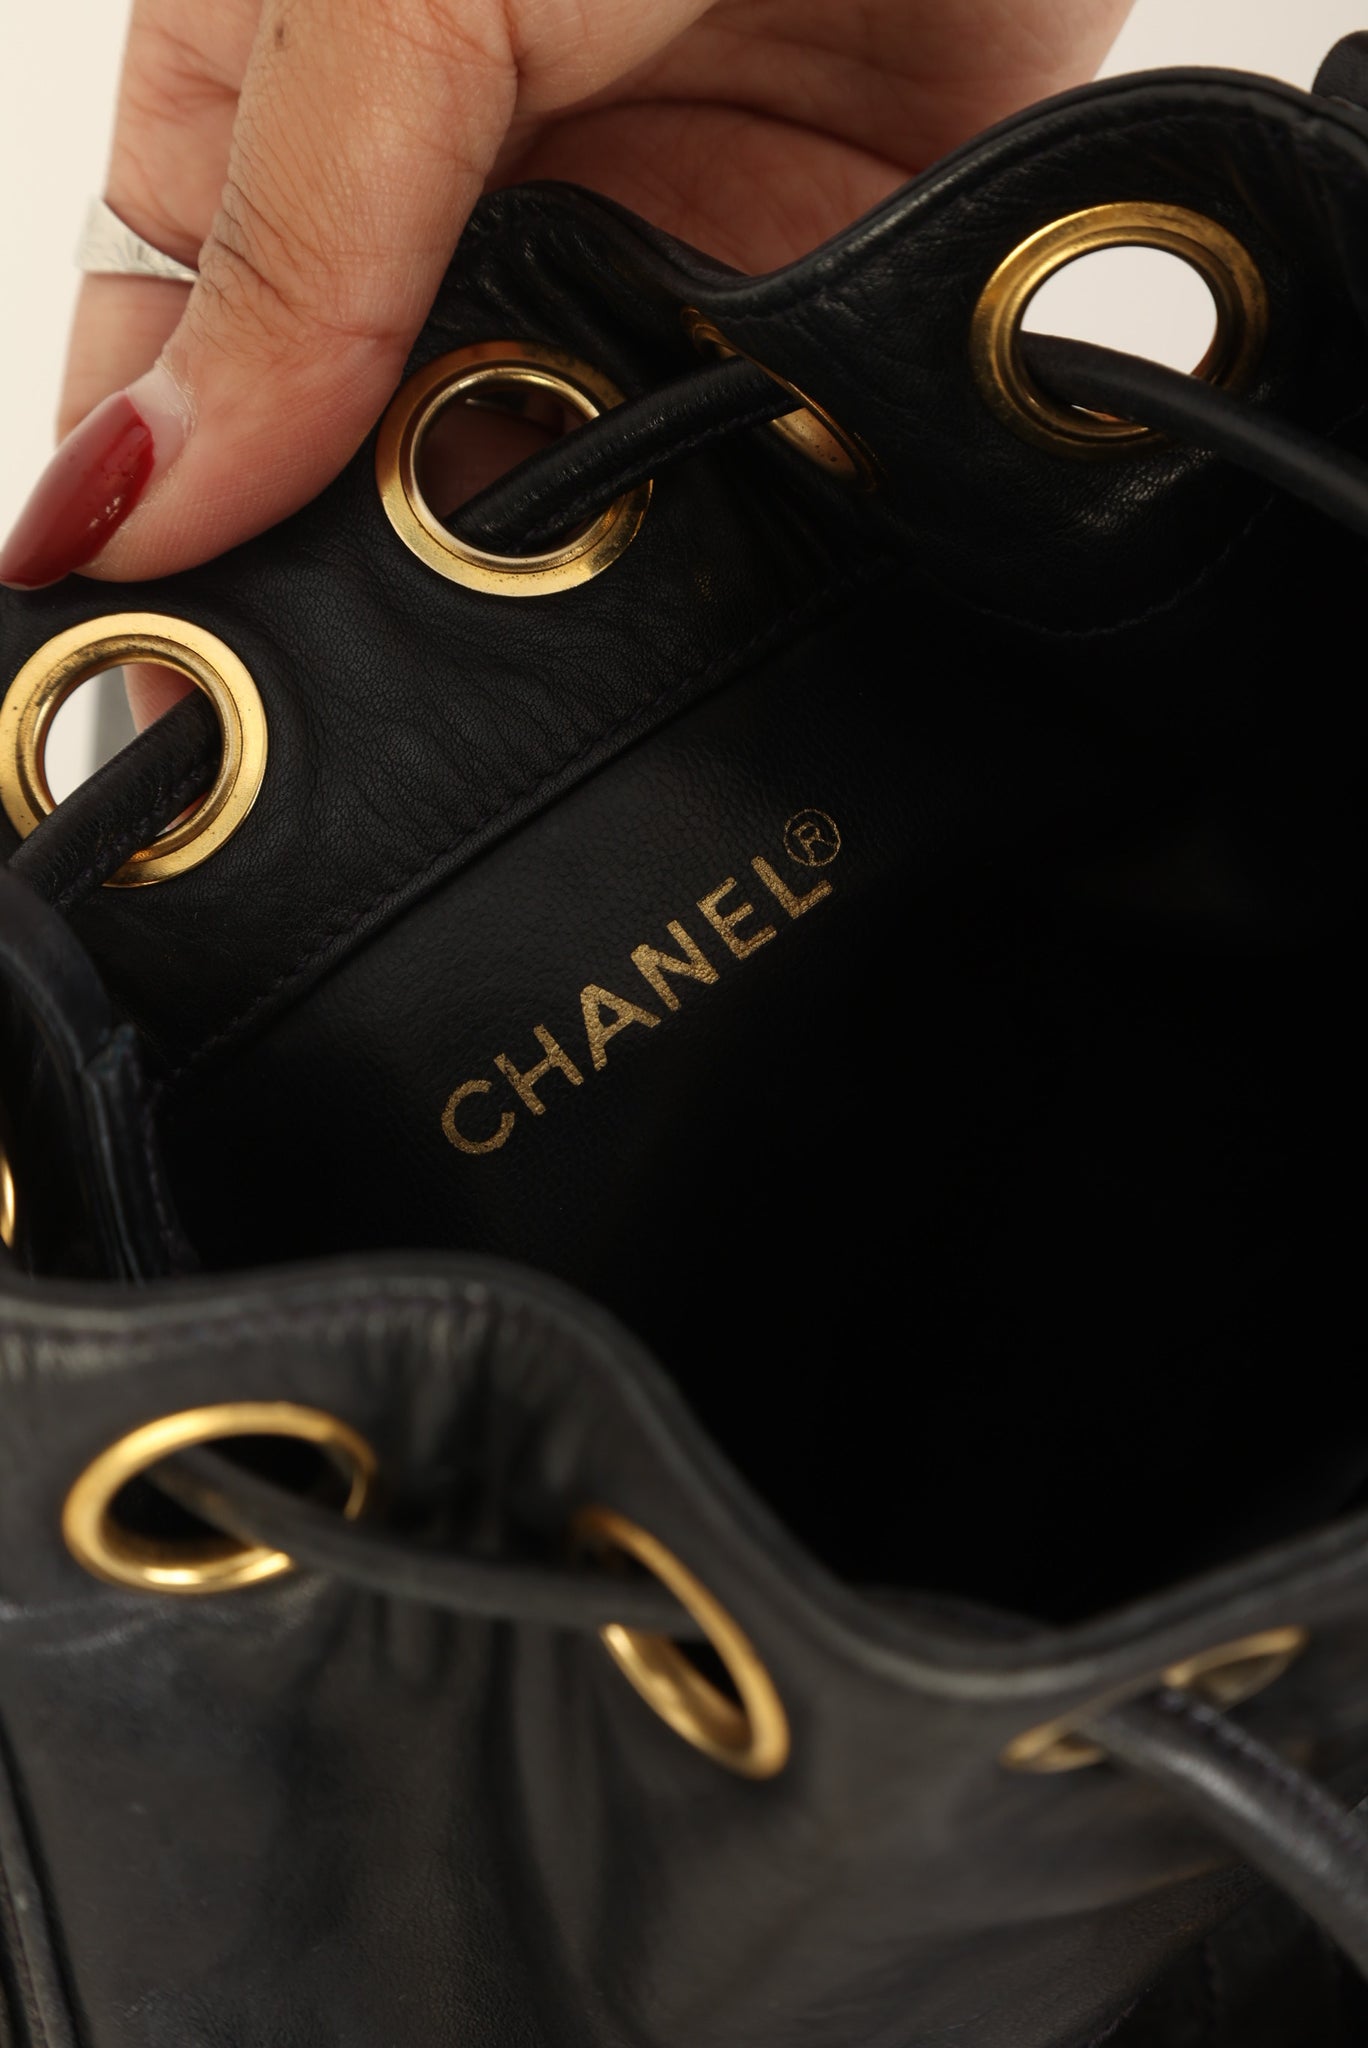 Chanel 1991 Lambskin Mini Bucket Bag